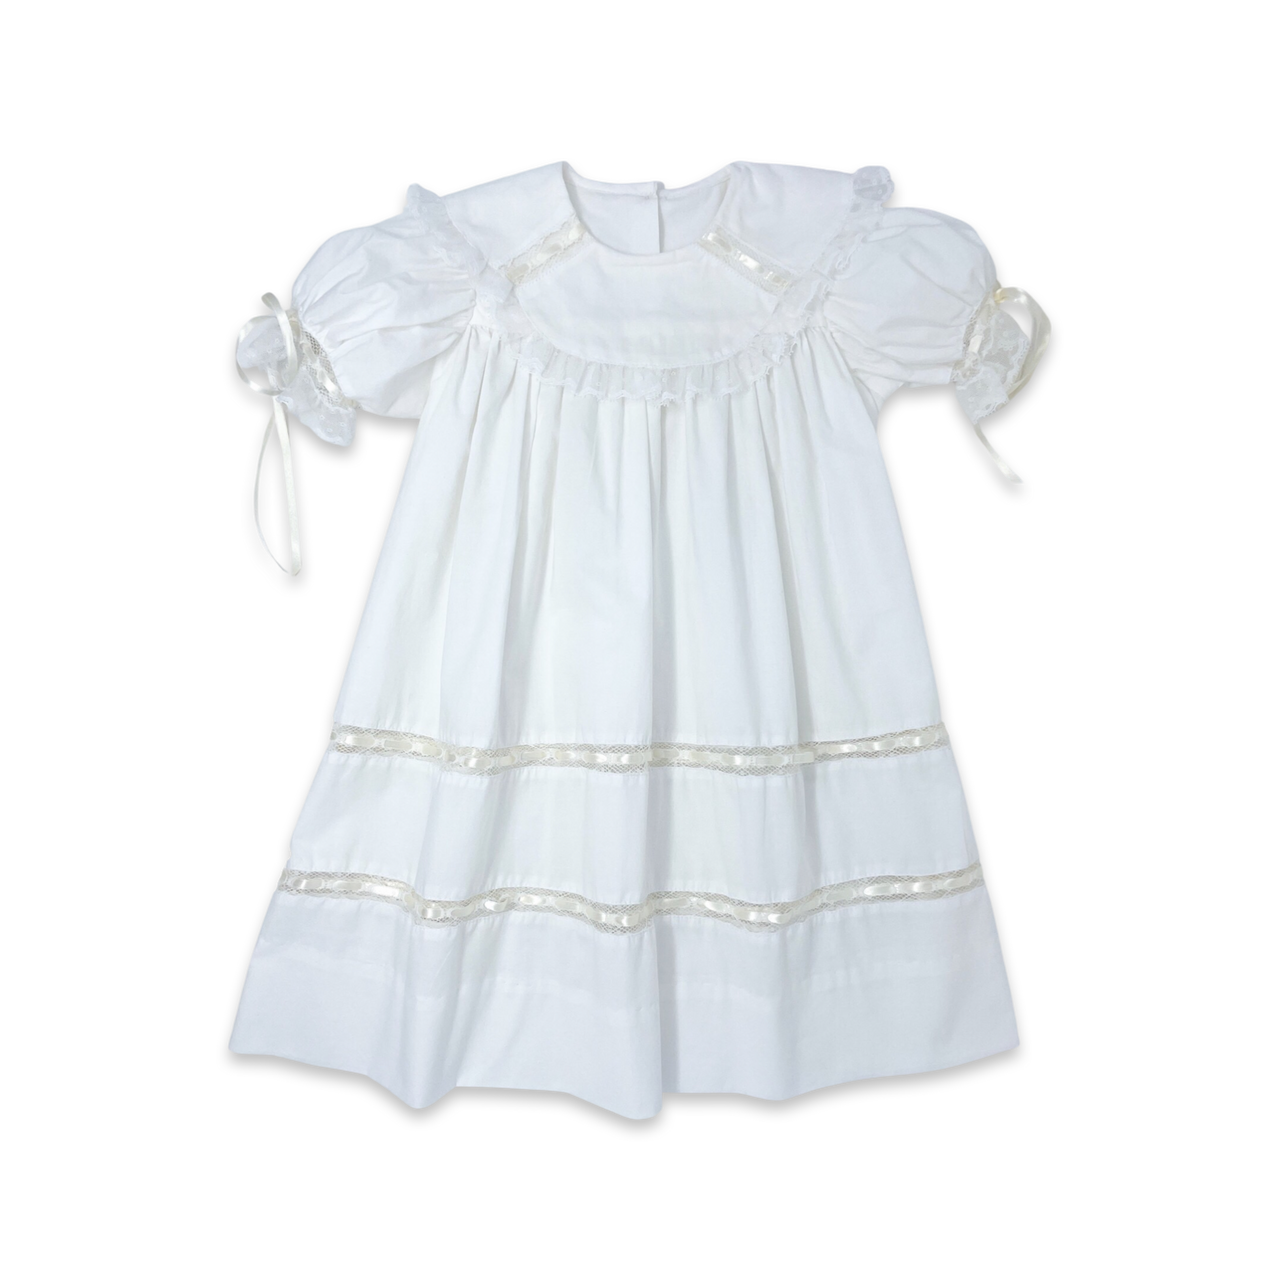 Lullaby Set Donahue Dress Blessings White Batiste Ecru Ribbon J0GDR706CF001 5012